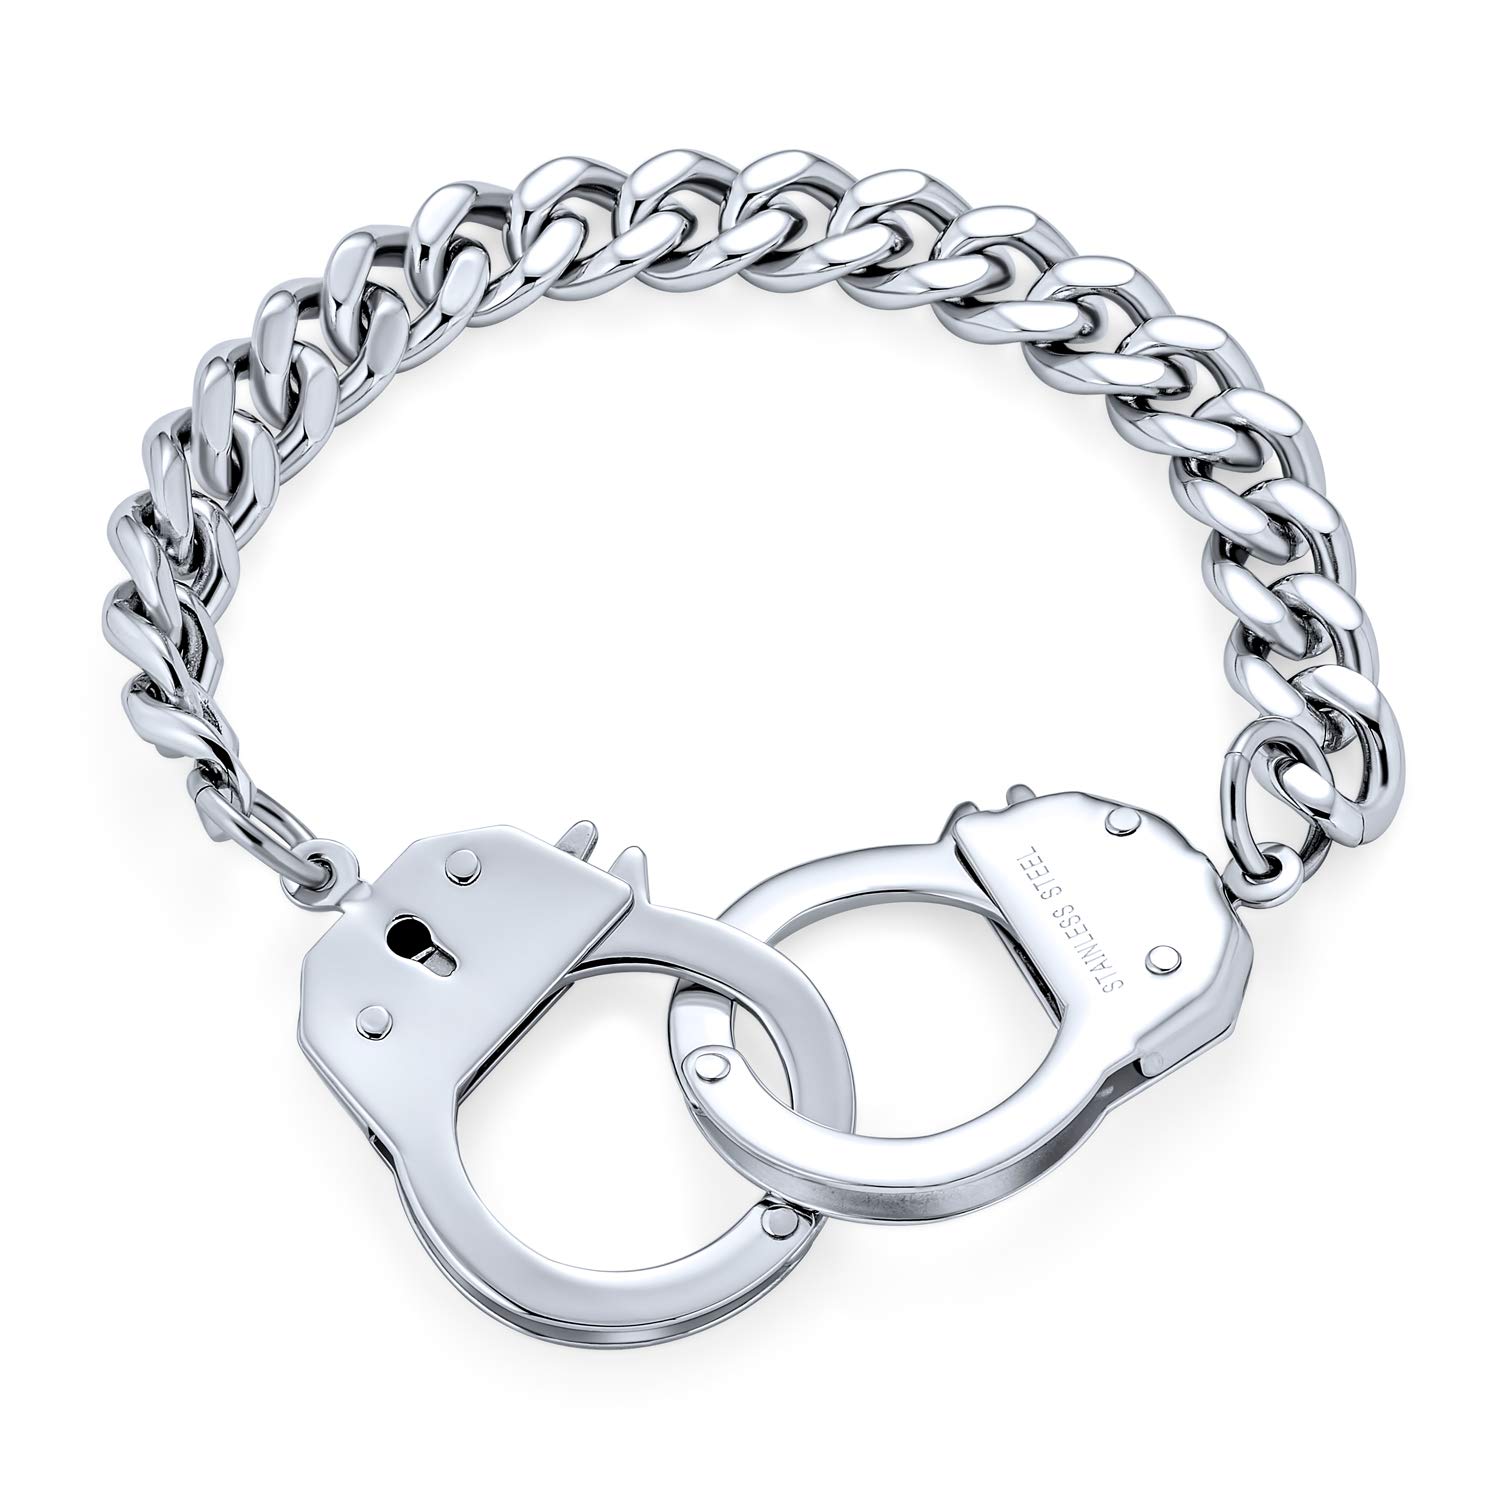 Bling Jewelry Biker-Schmuck Paare Handschellen Statement Armband Für Männer Kubanische Panzerkette Silberton Edelstahl 8,5 Zoll